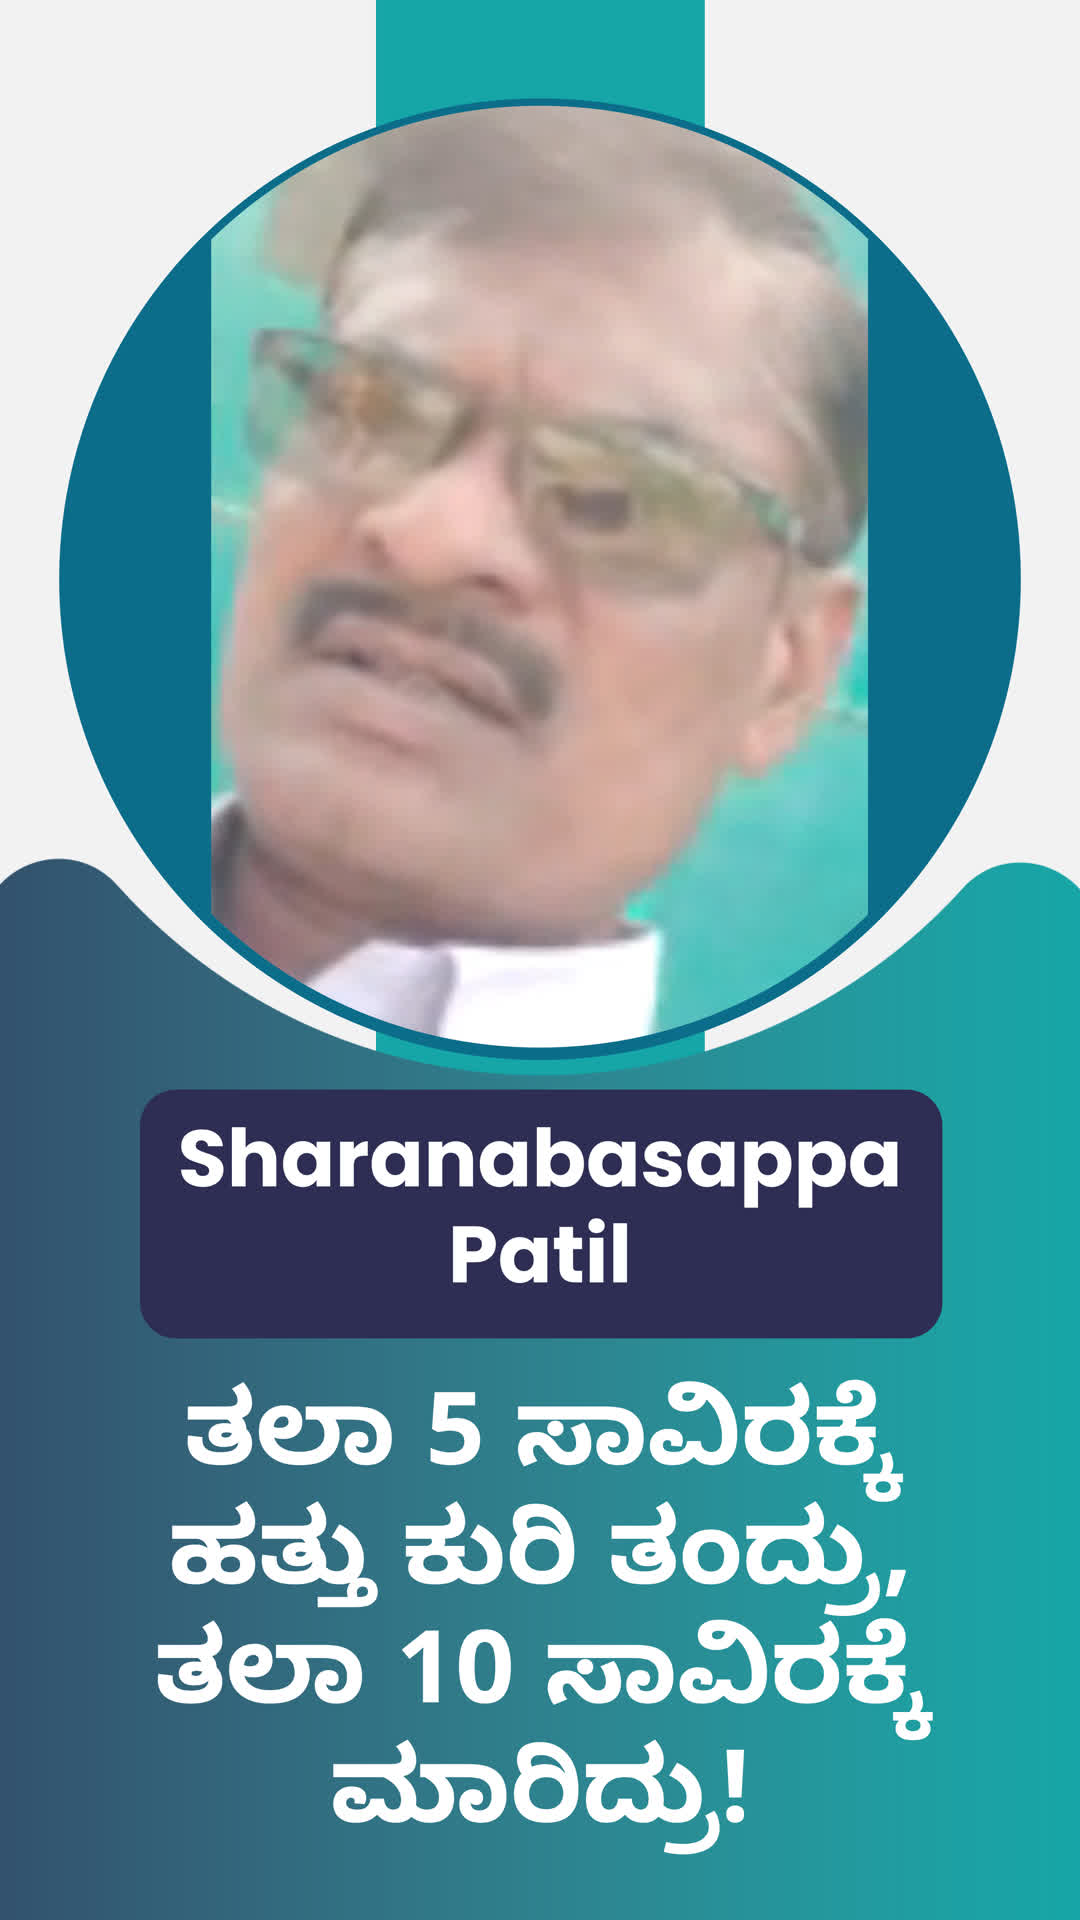 Sharanabasappa's Honest Review of ffreedom app - Kalaburagi ,Karnataka